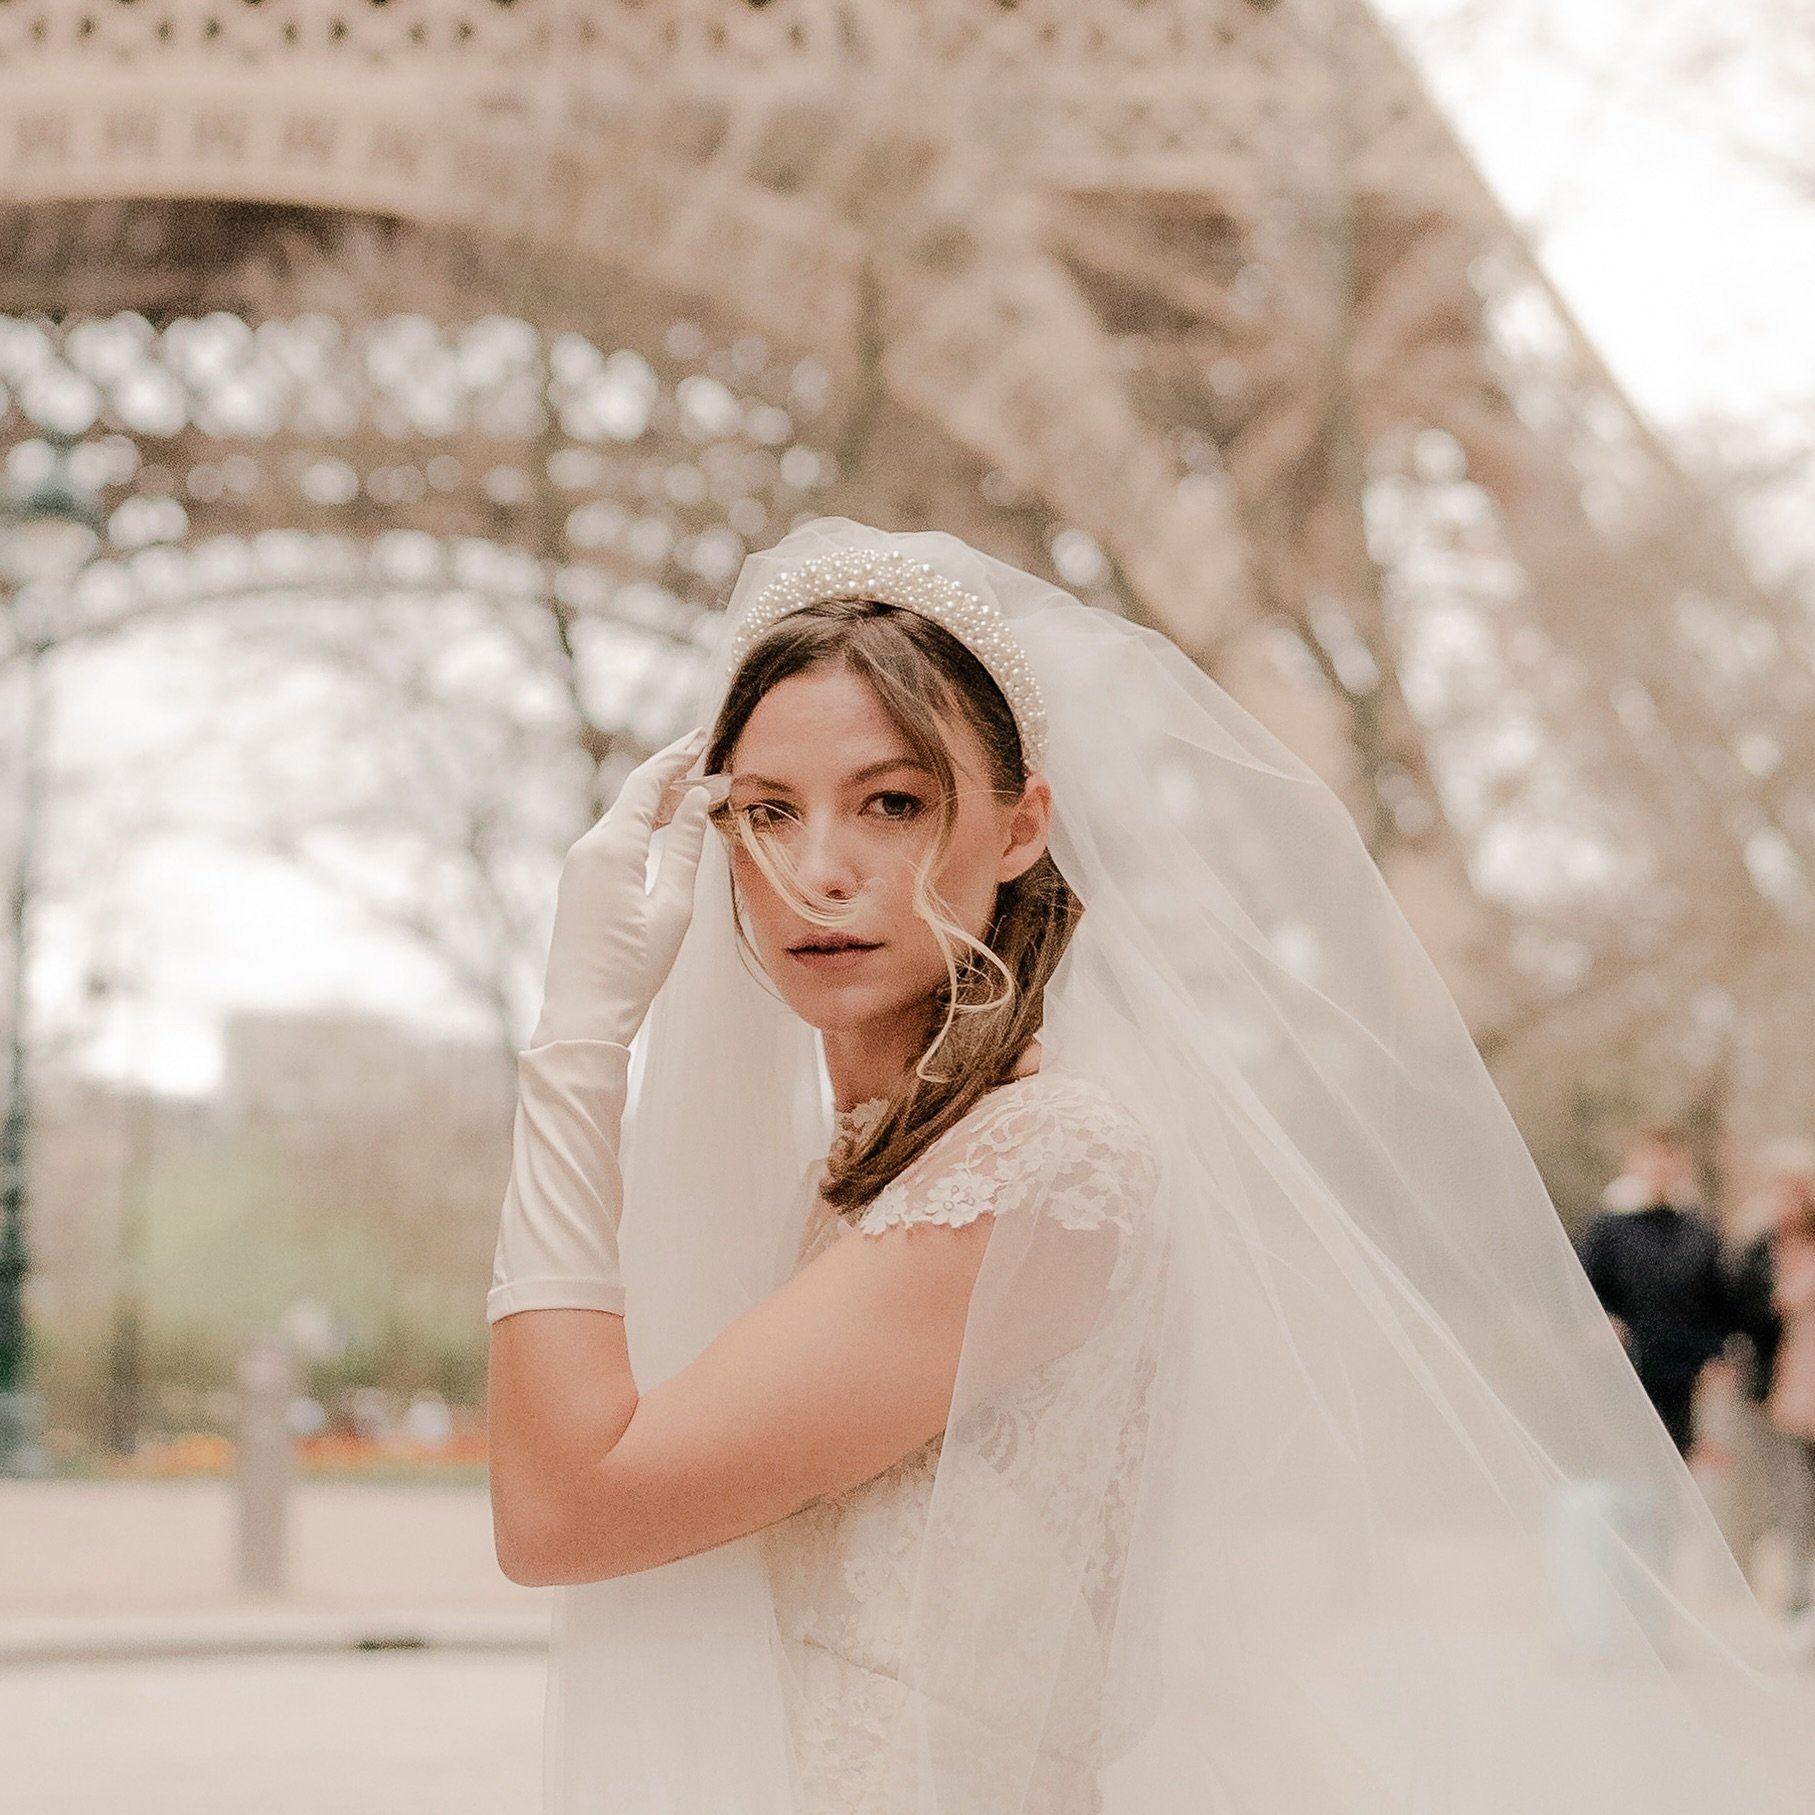 👰 In the city of love, with the Eiffel Tower as her backdrop, she glows ✨✨ 
.
.
Wp: @dianadaros 
Ph: @michael_zennaro 
Dress: @lesposedigio 
.
.
#WeddingGlam #Parisweddinghairandmakeup #Pariswedding #BridalBeauty #MakeupArtist #HairStylist #Weddingi